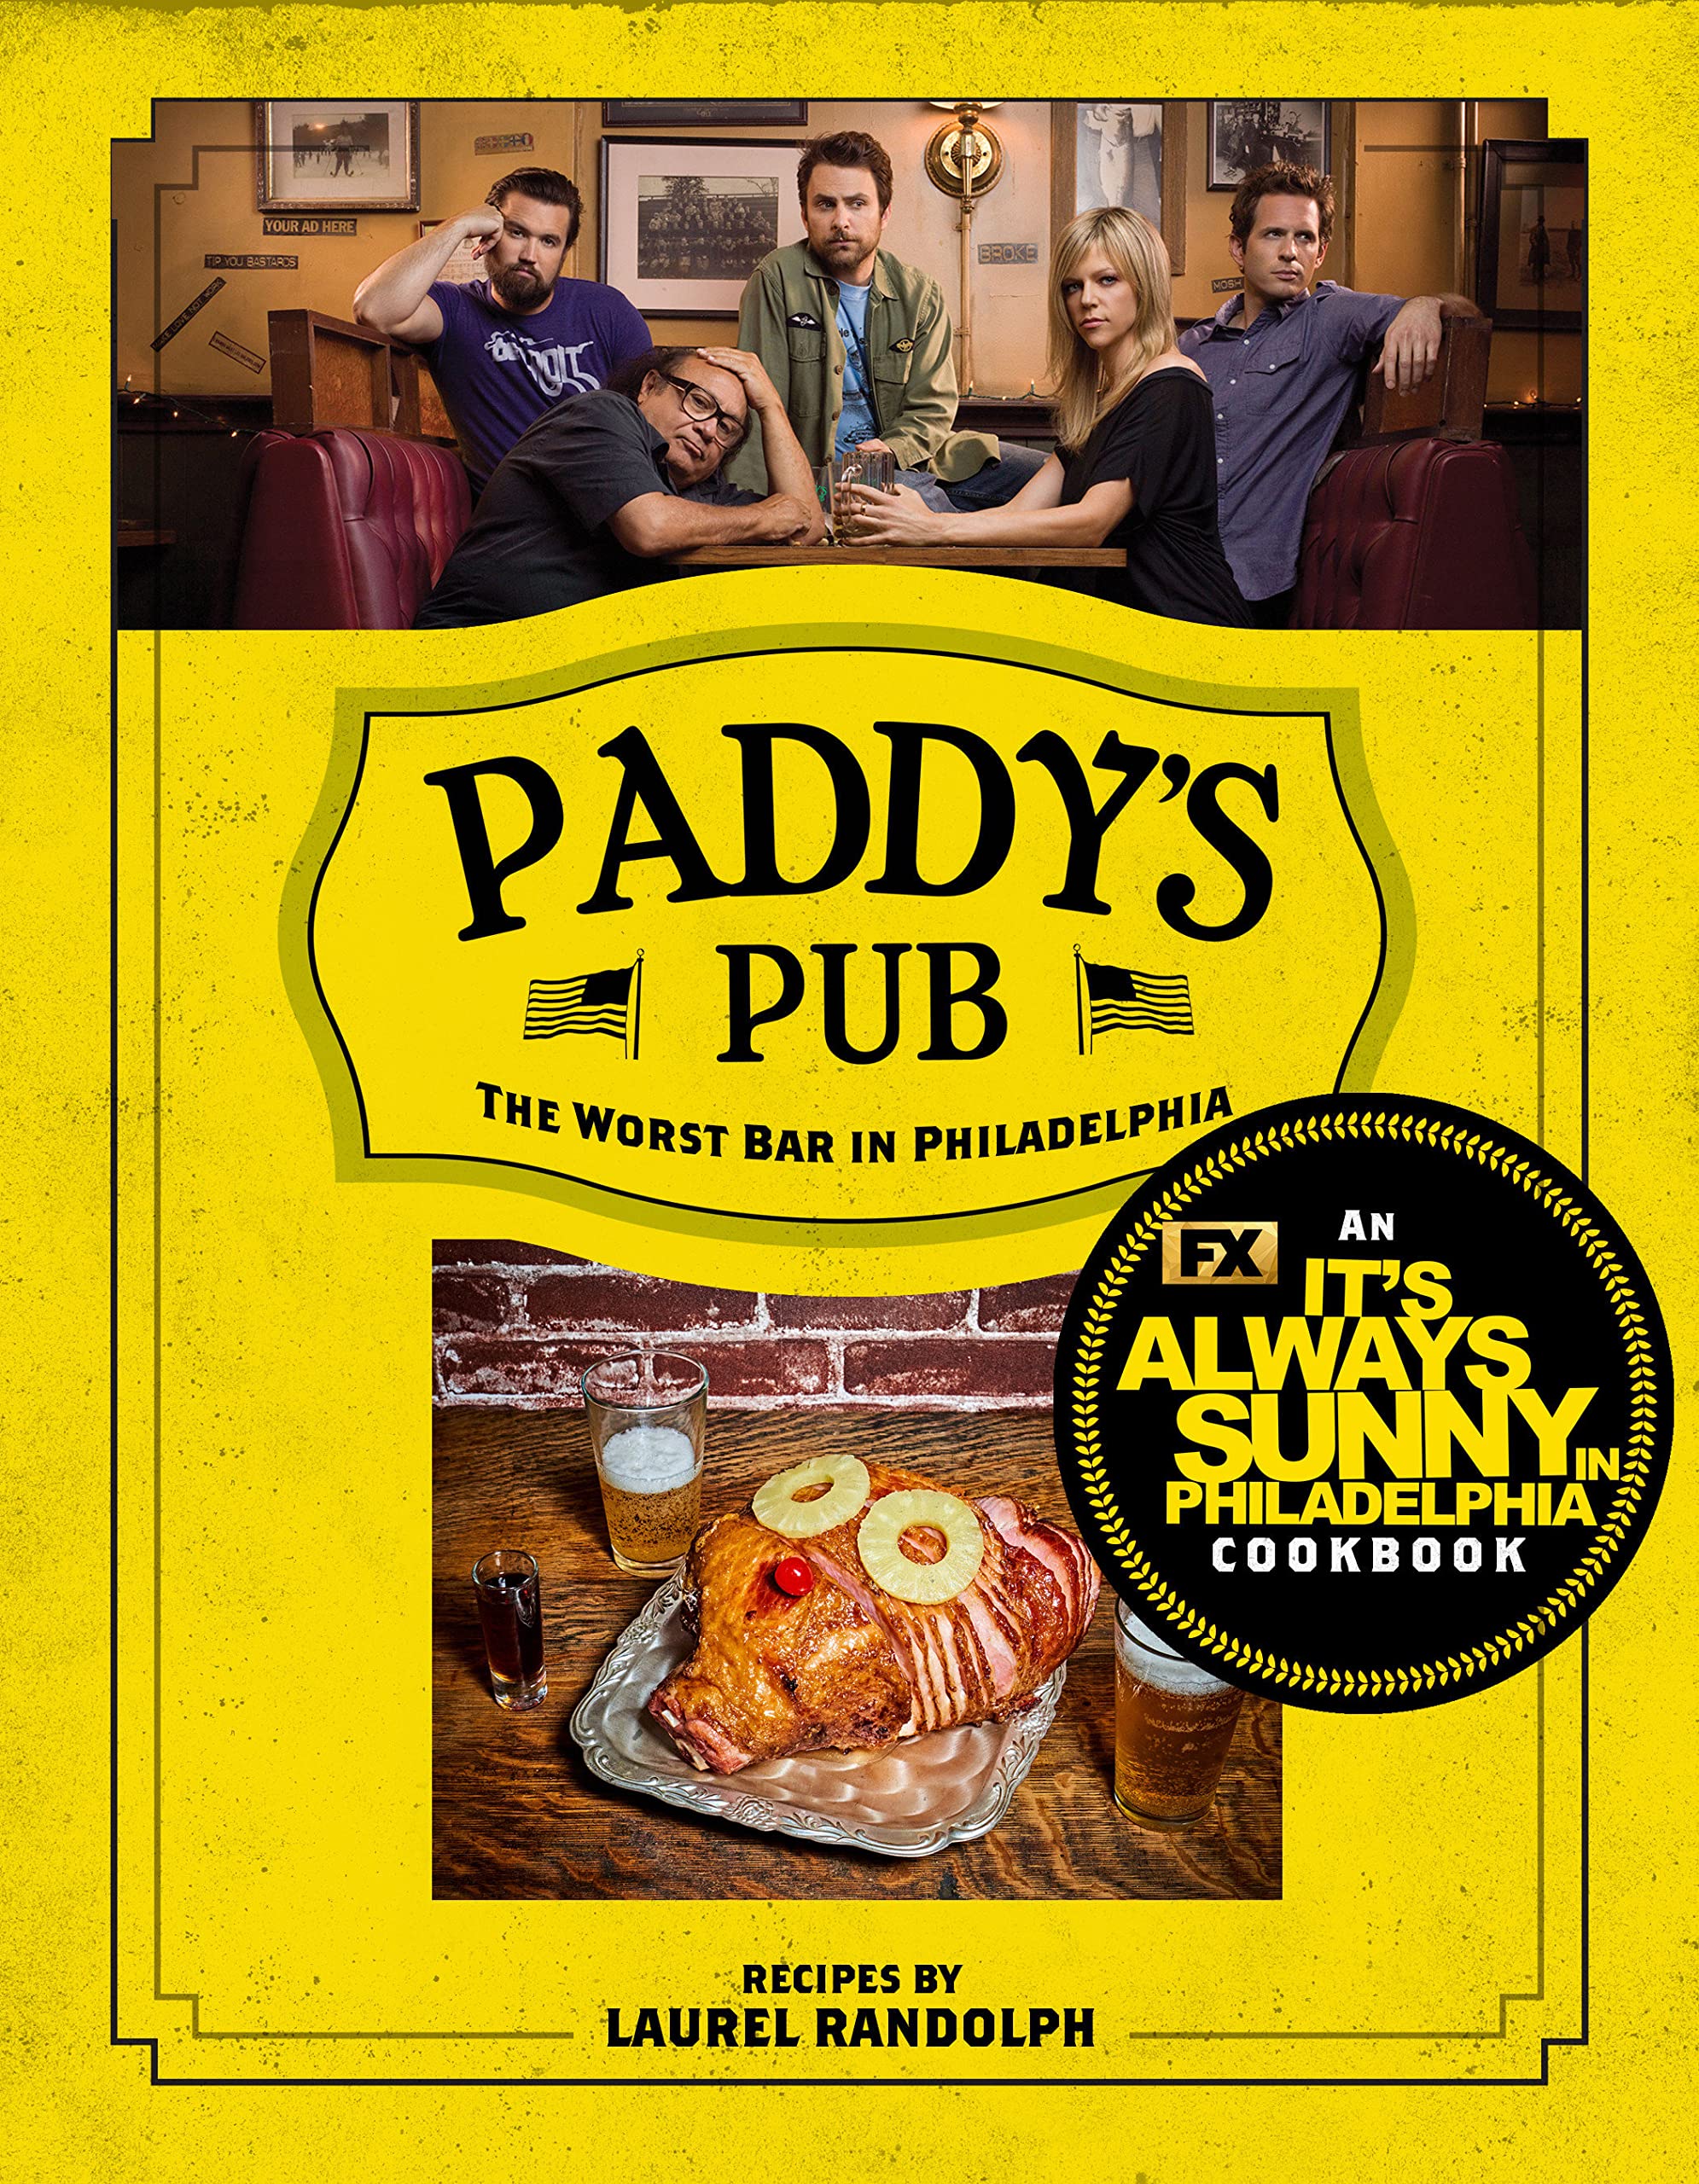 Paddys Pub The Worst Bar in Philadelphia